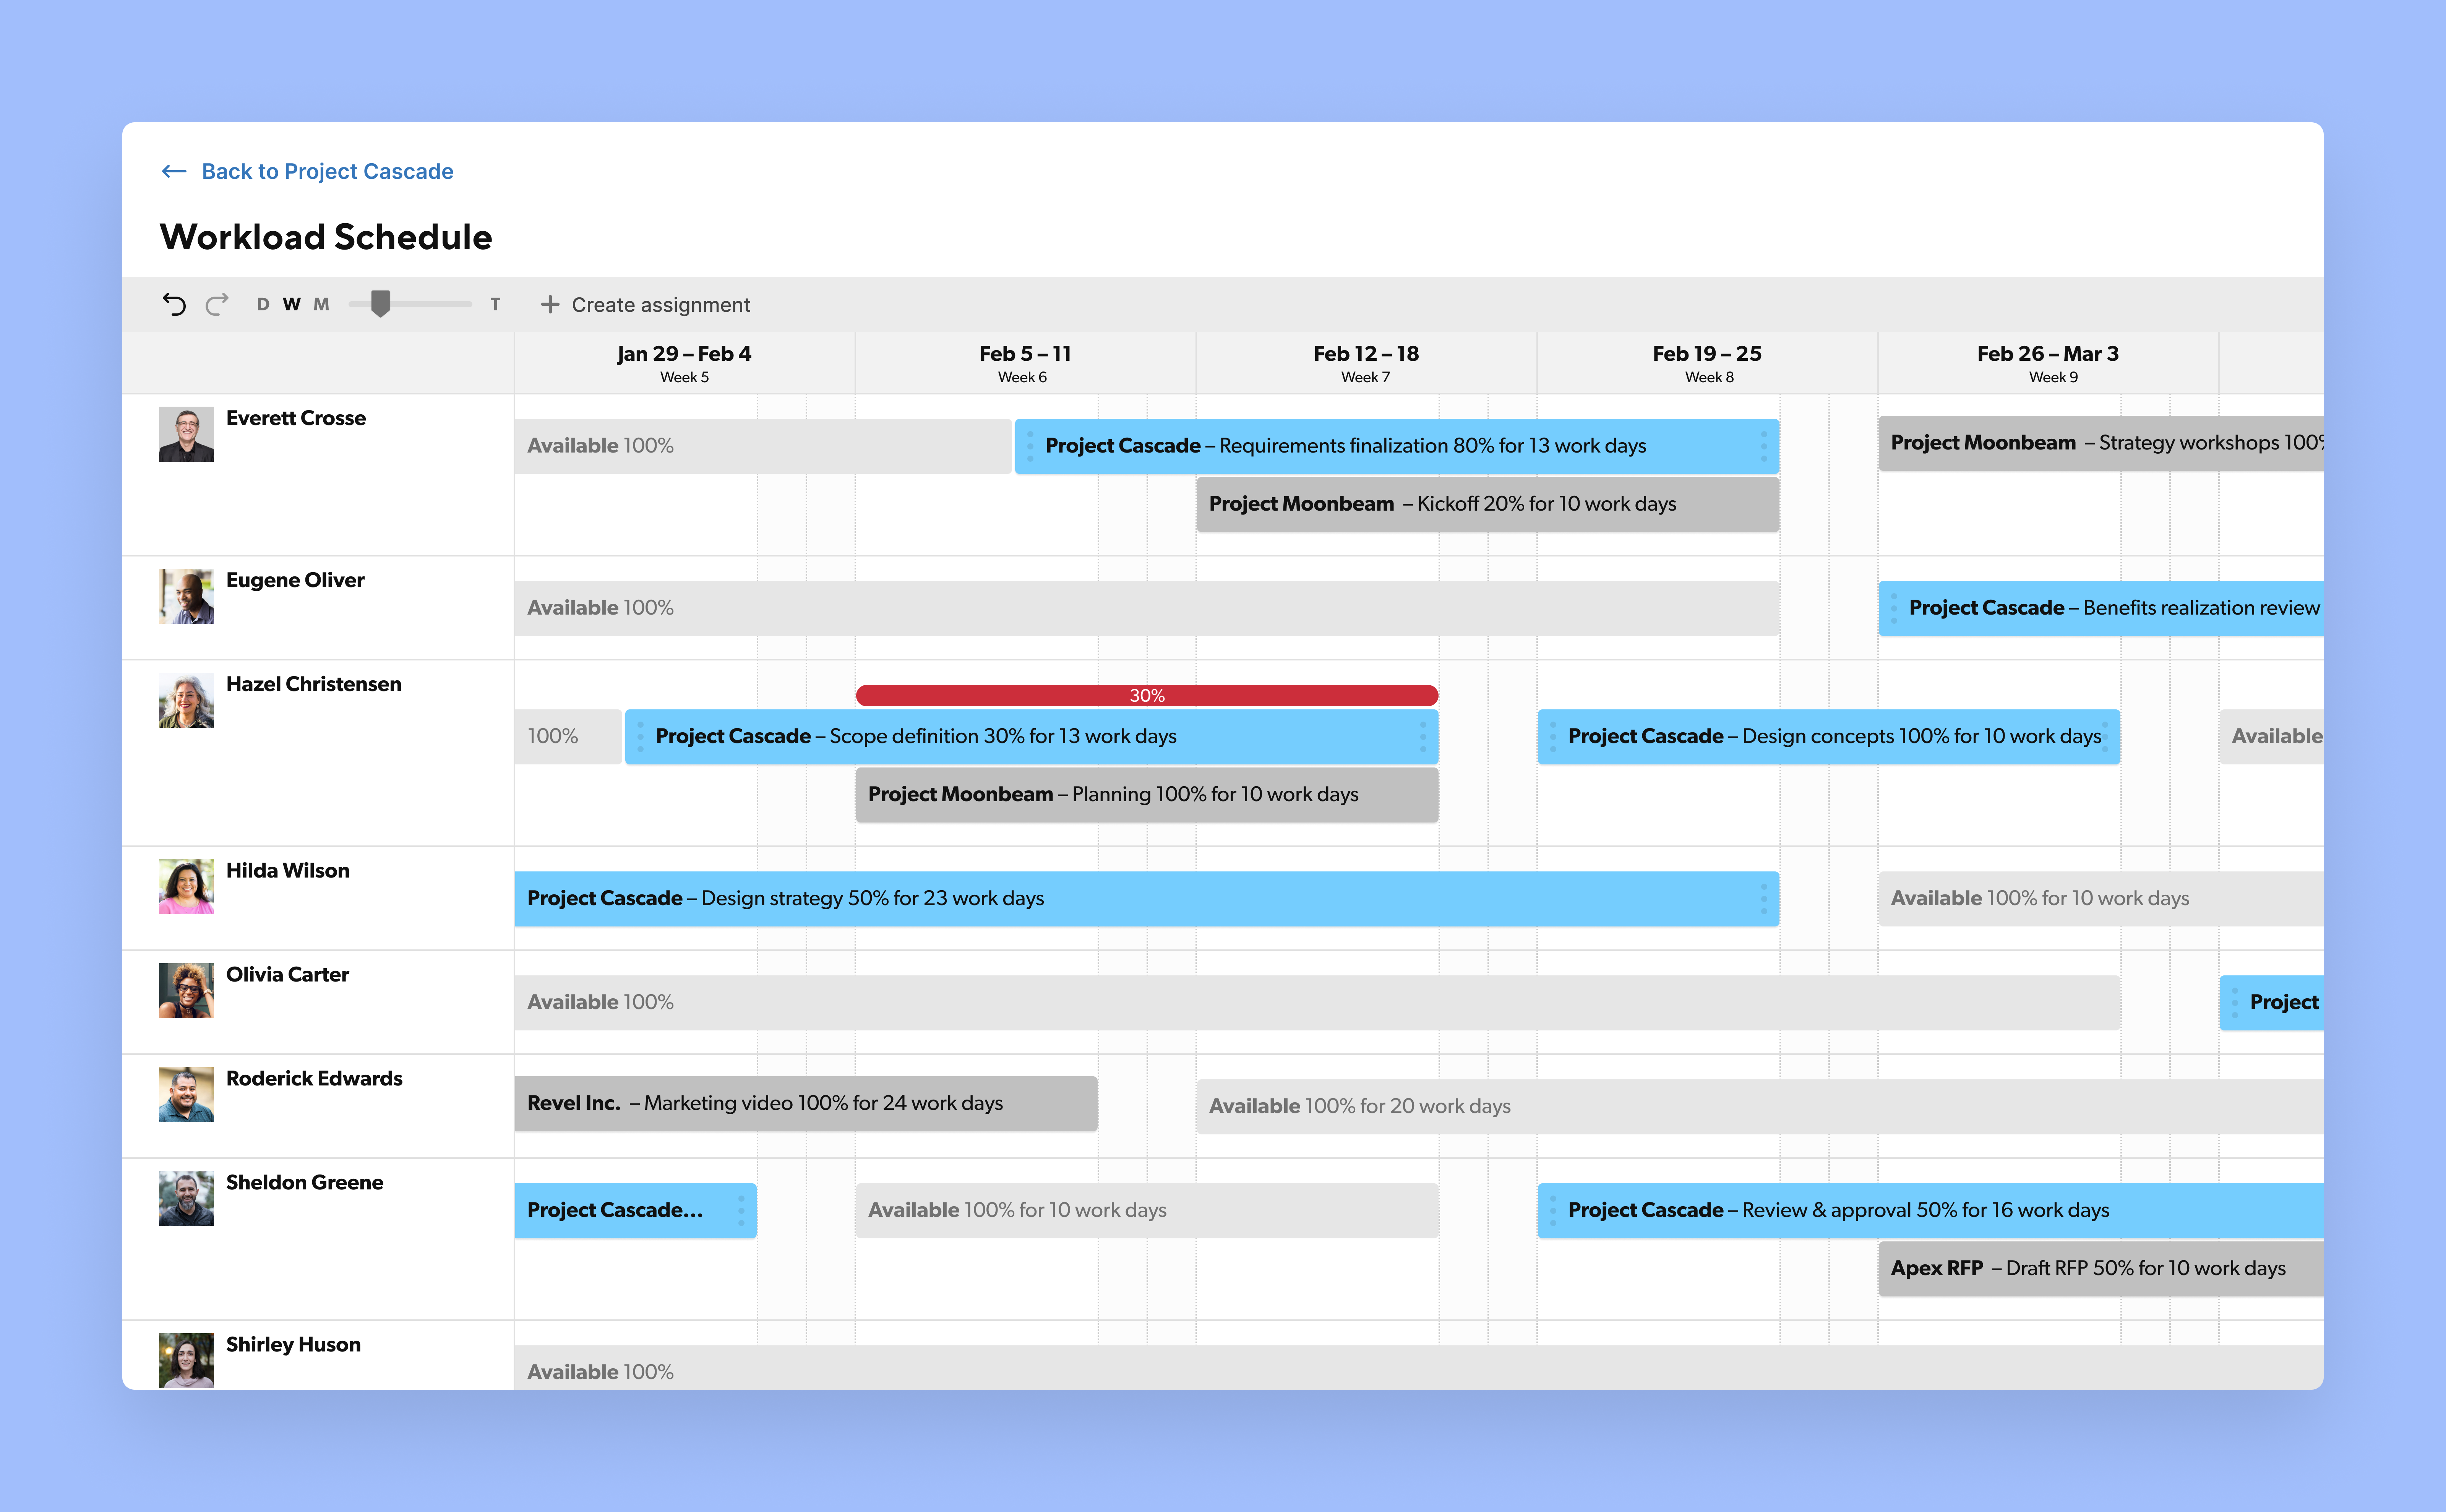 Resource Management workload schedule